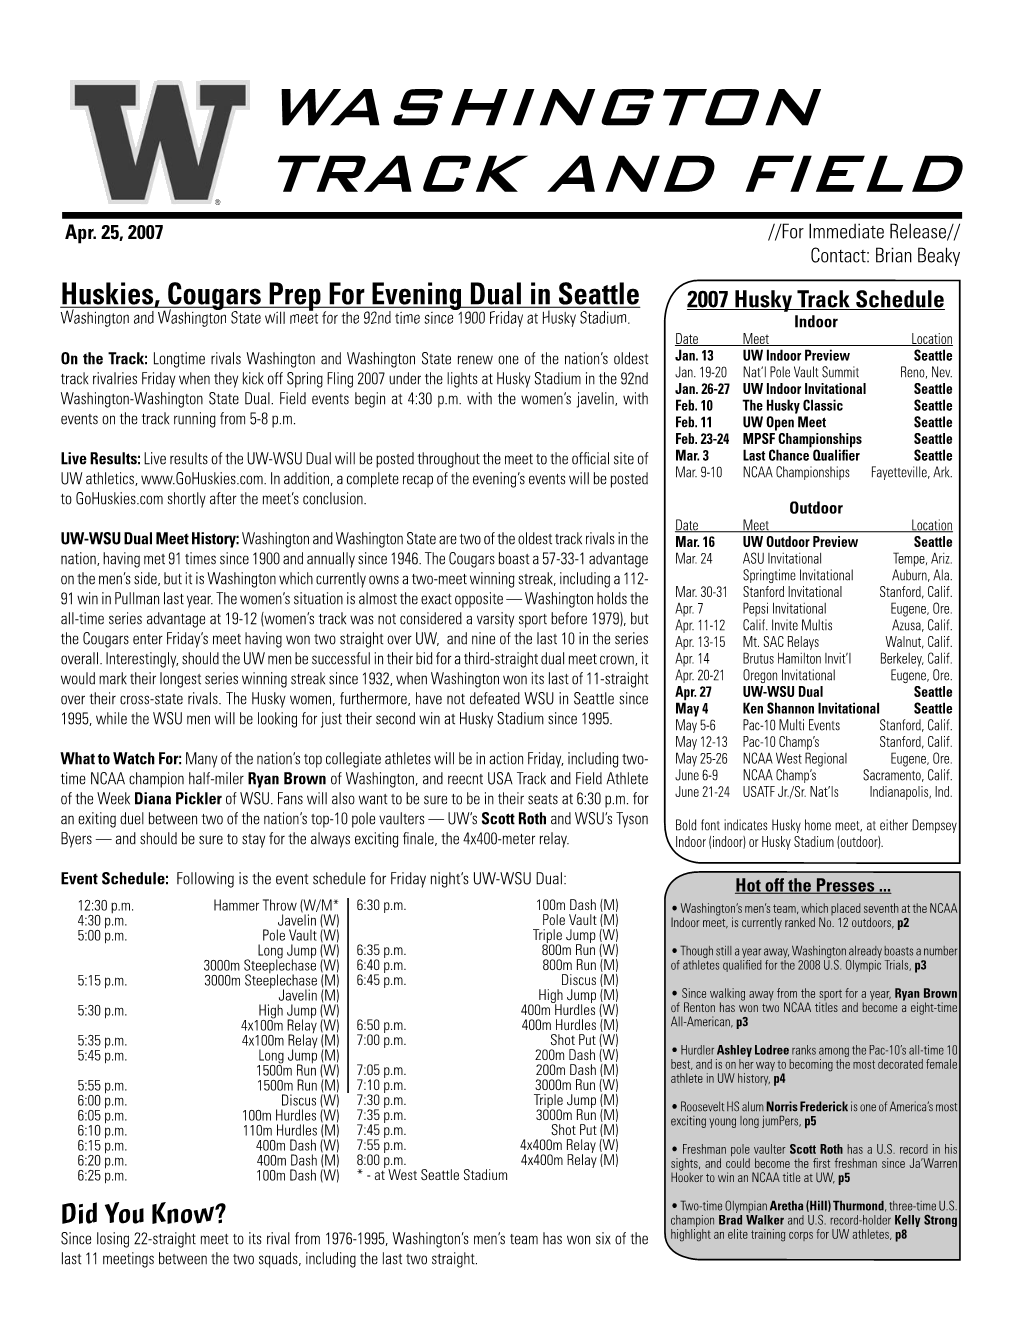 WASHINGTON TRACK and FIELD Apr